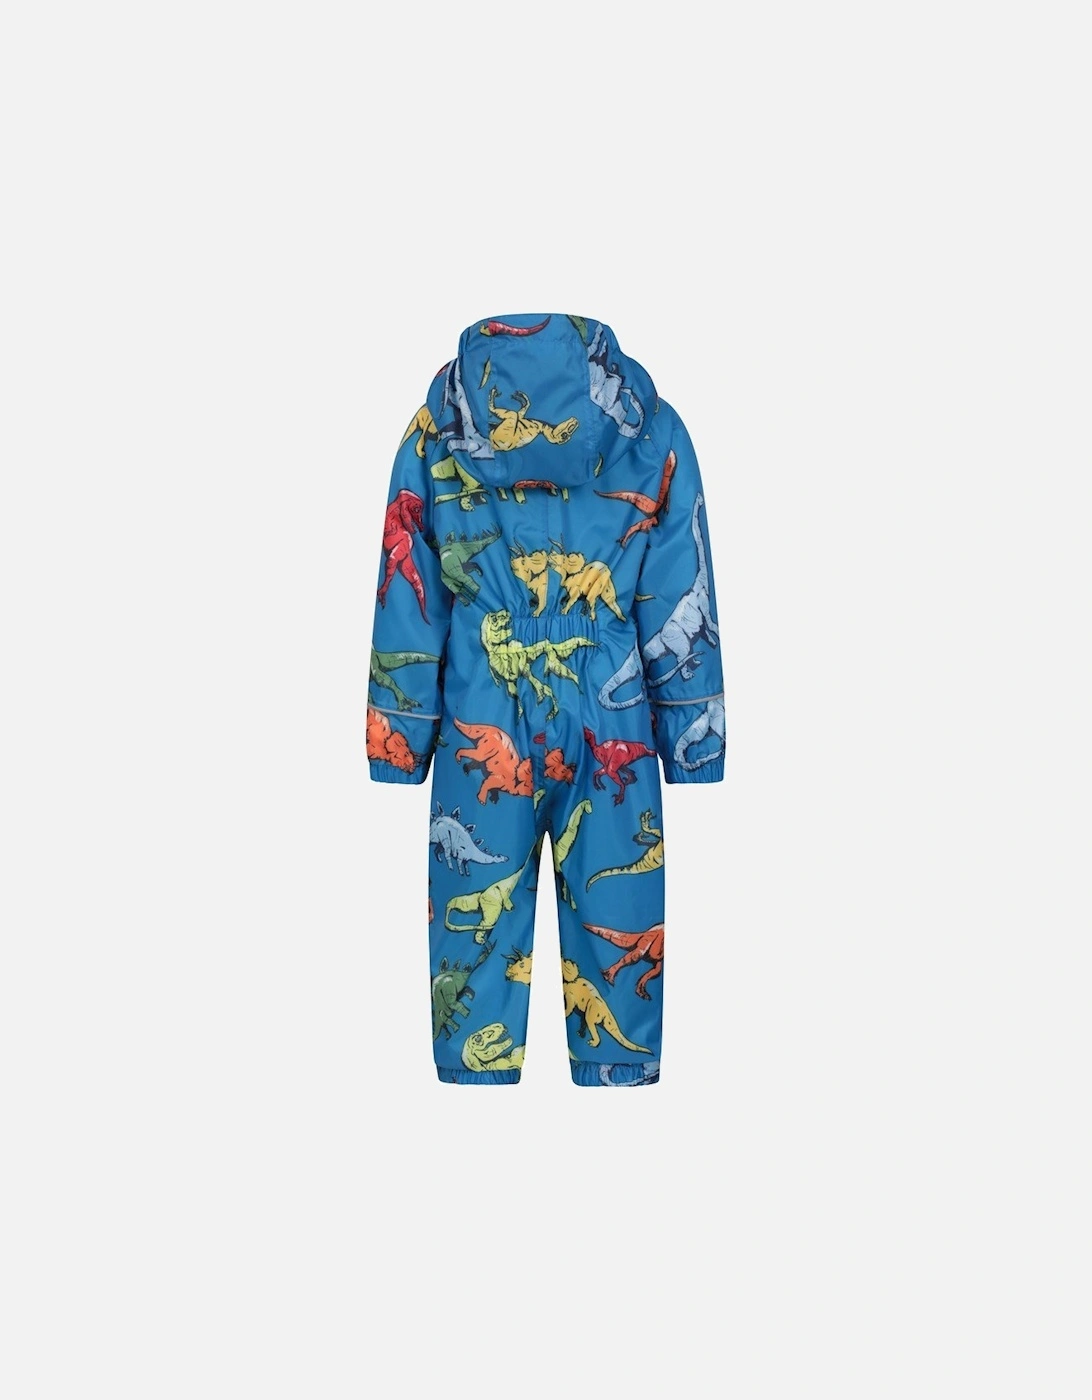 Childrens/Kids Puddle Dinosaur Rain Suit